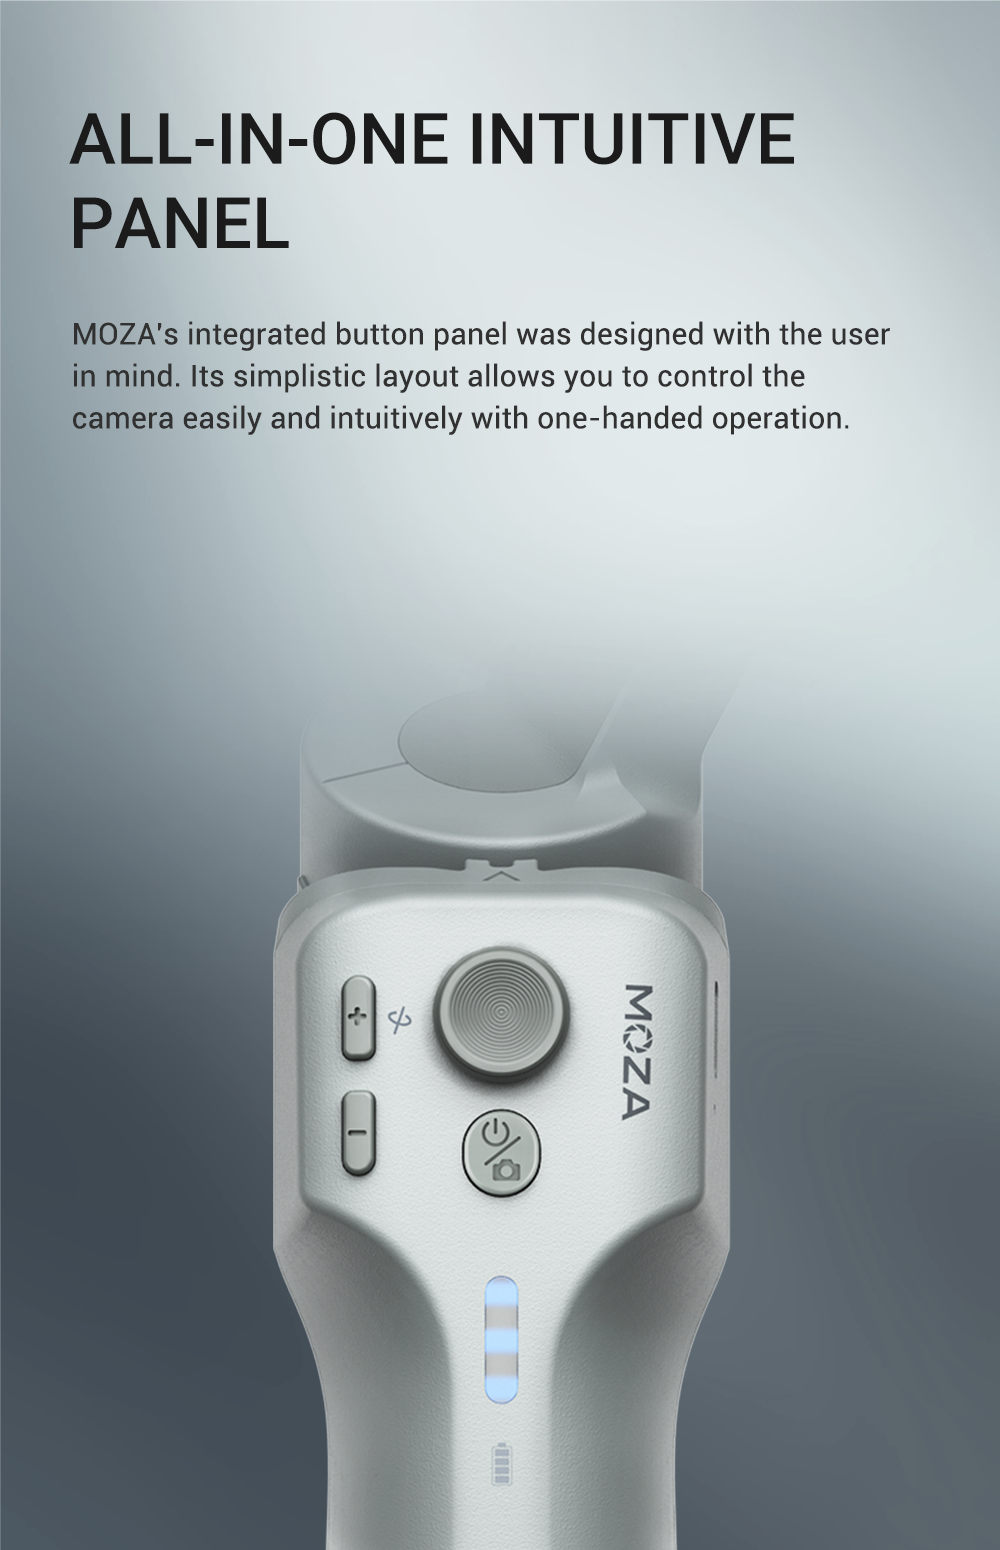 Moza Mini MX 3-Axis Smartphone Handheld Gimbal Stabilizer Selfie Stick